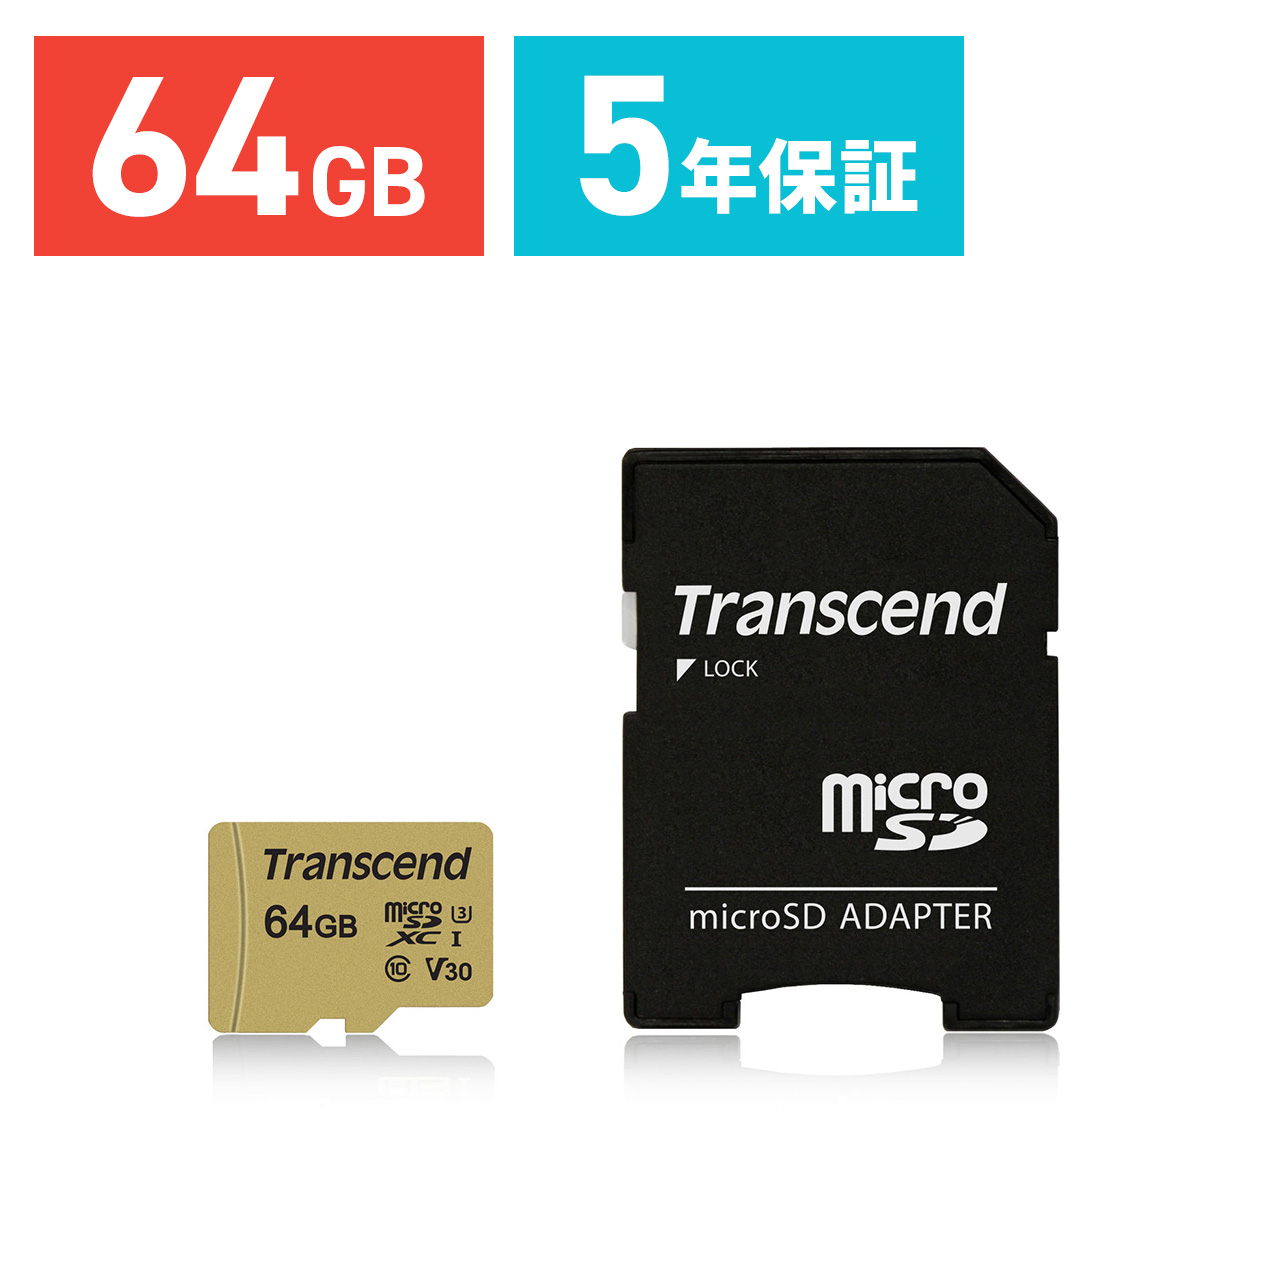 microSDXCカード 64GB Class10 UHS-I U3 V30 Nintendo Switch対応 Transcend製  TS64GUSD500S